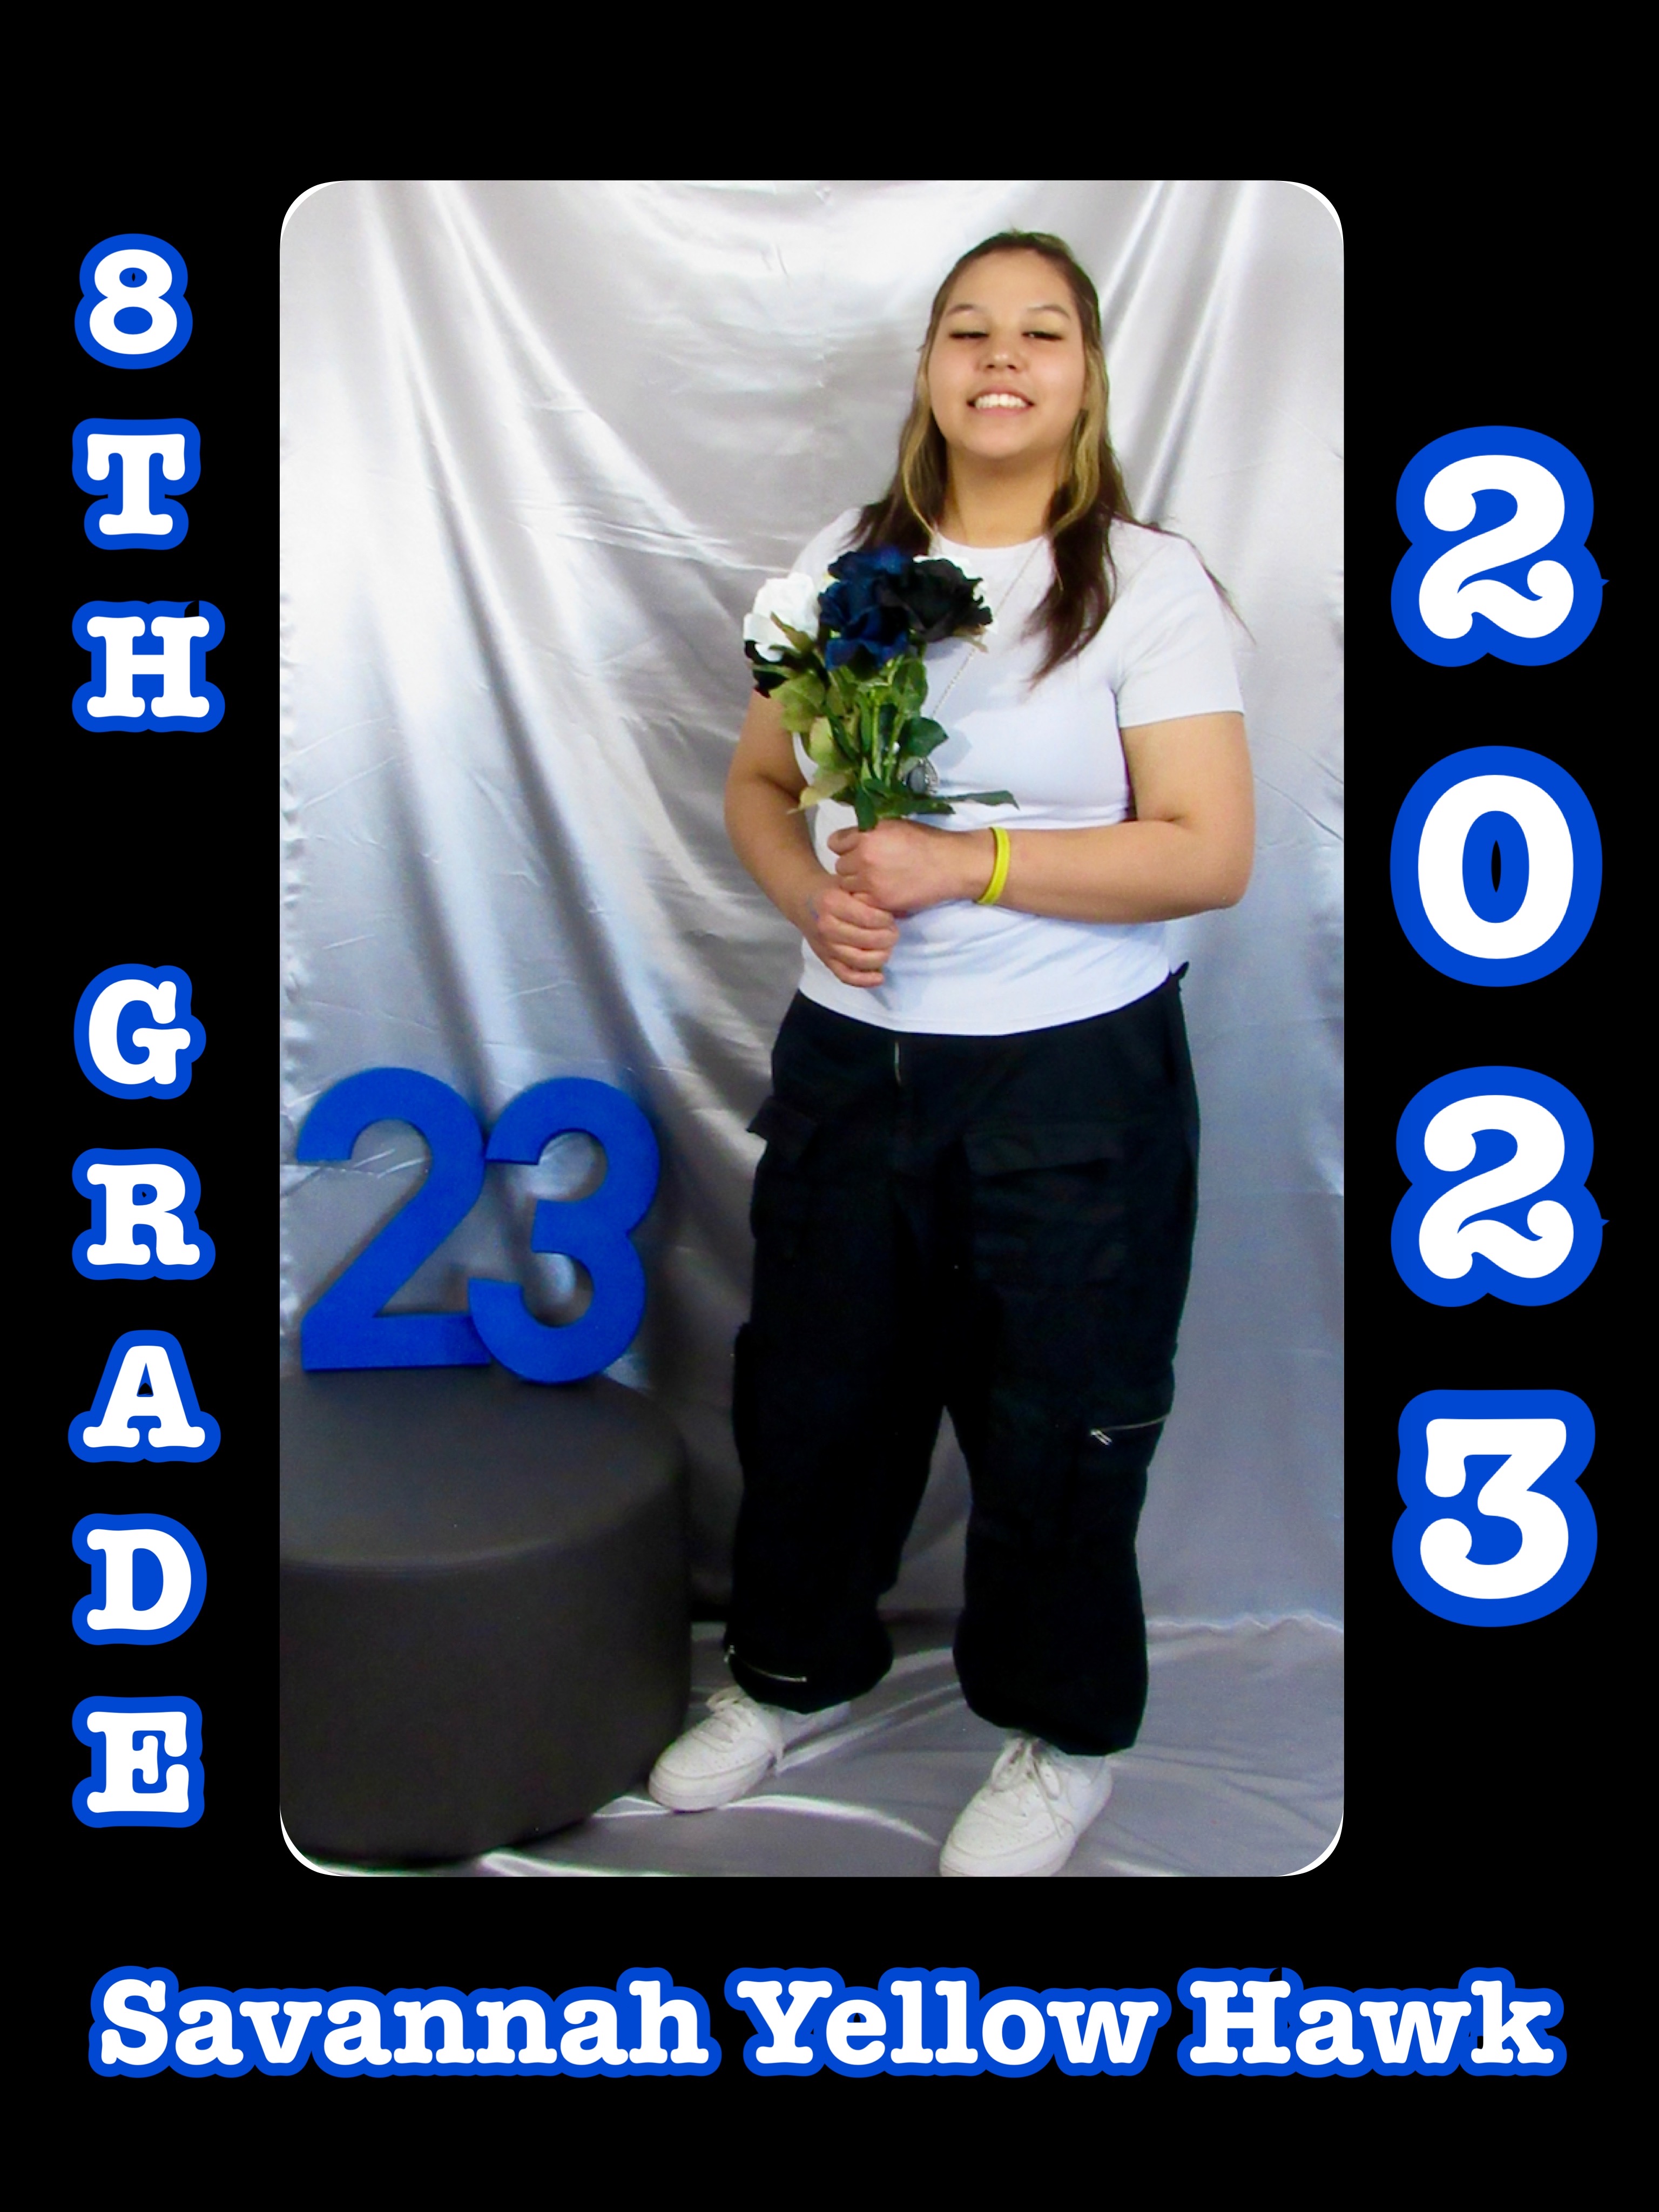 8th Grade Graduation